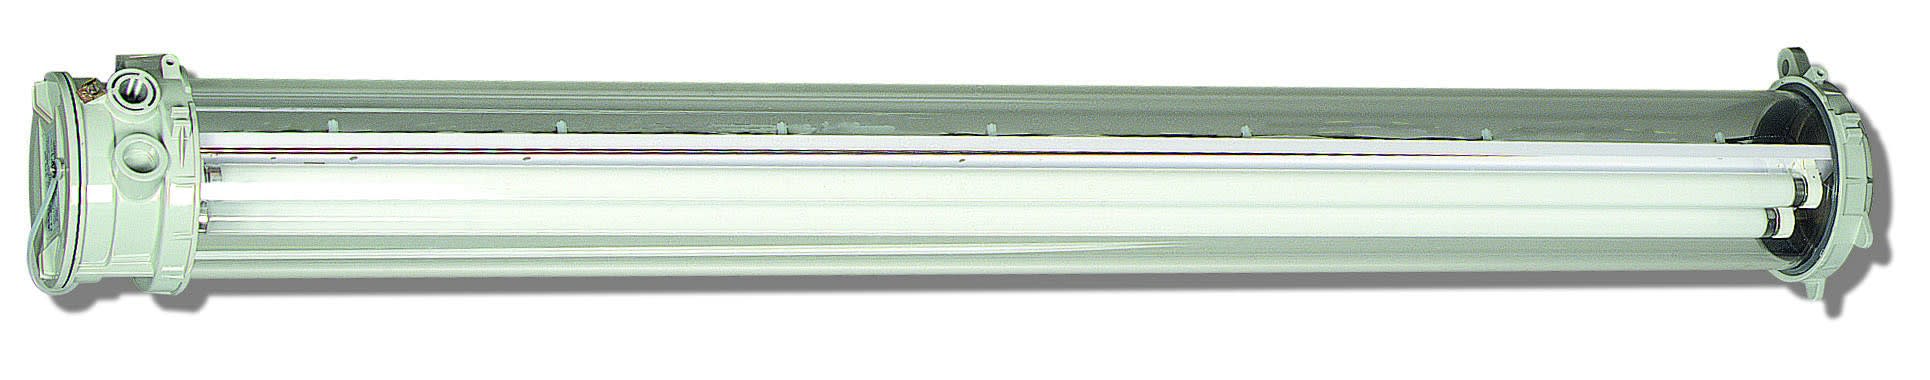 Atx - FD - Luminaire fluorescent 2x58W M20 ATEX - IECEx Zone 1-21